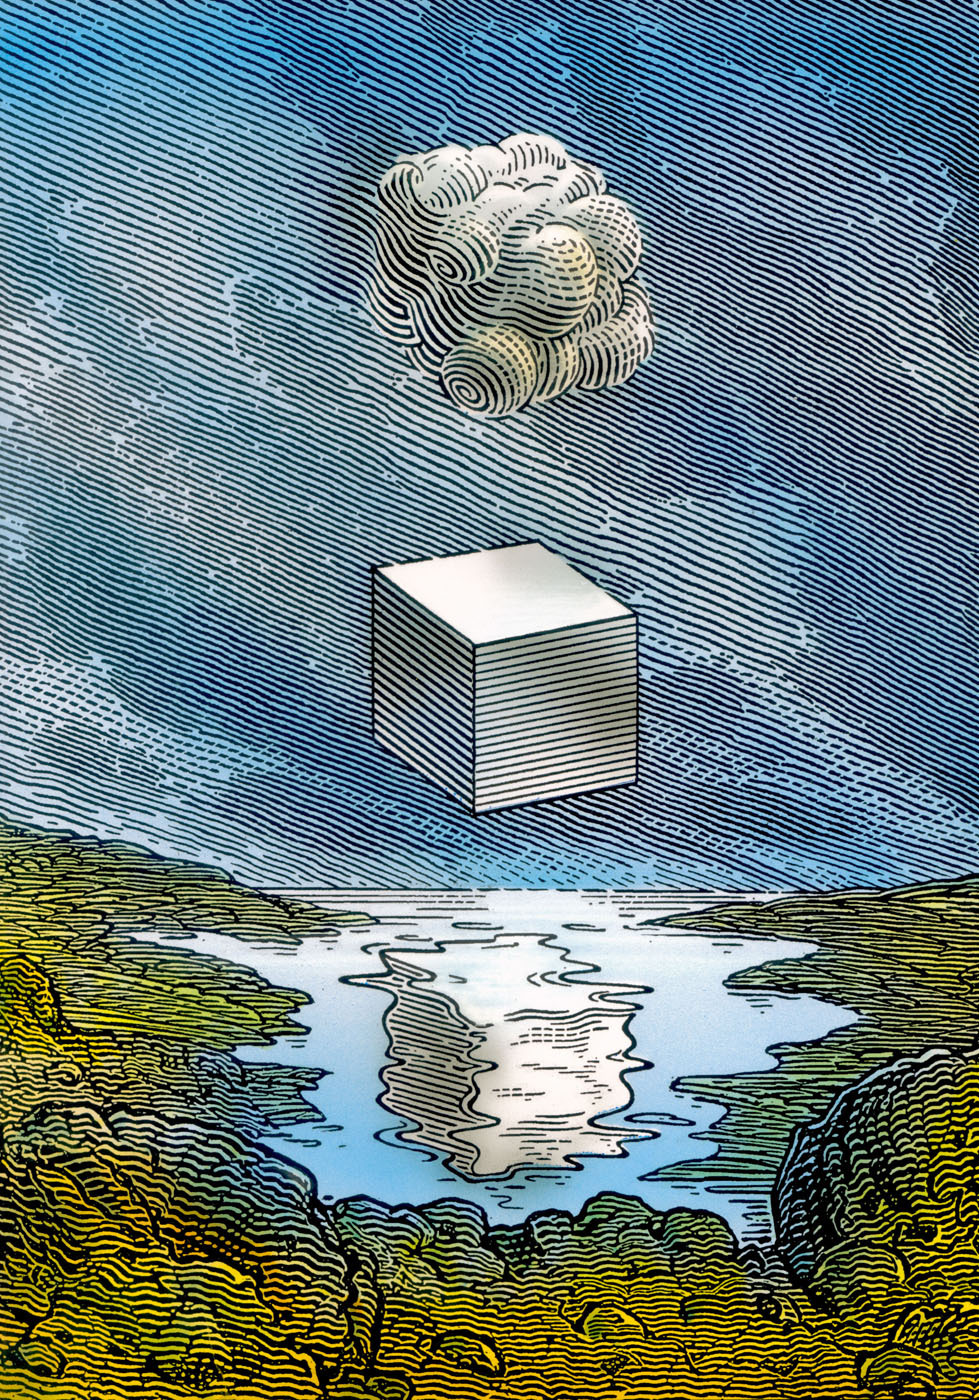 István Orosz — Cloud with Cube (etching, 1998)